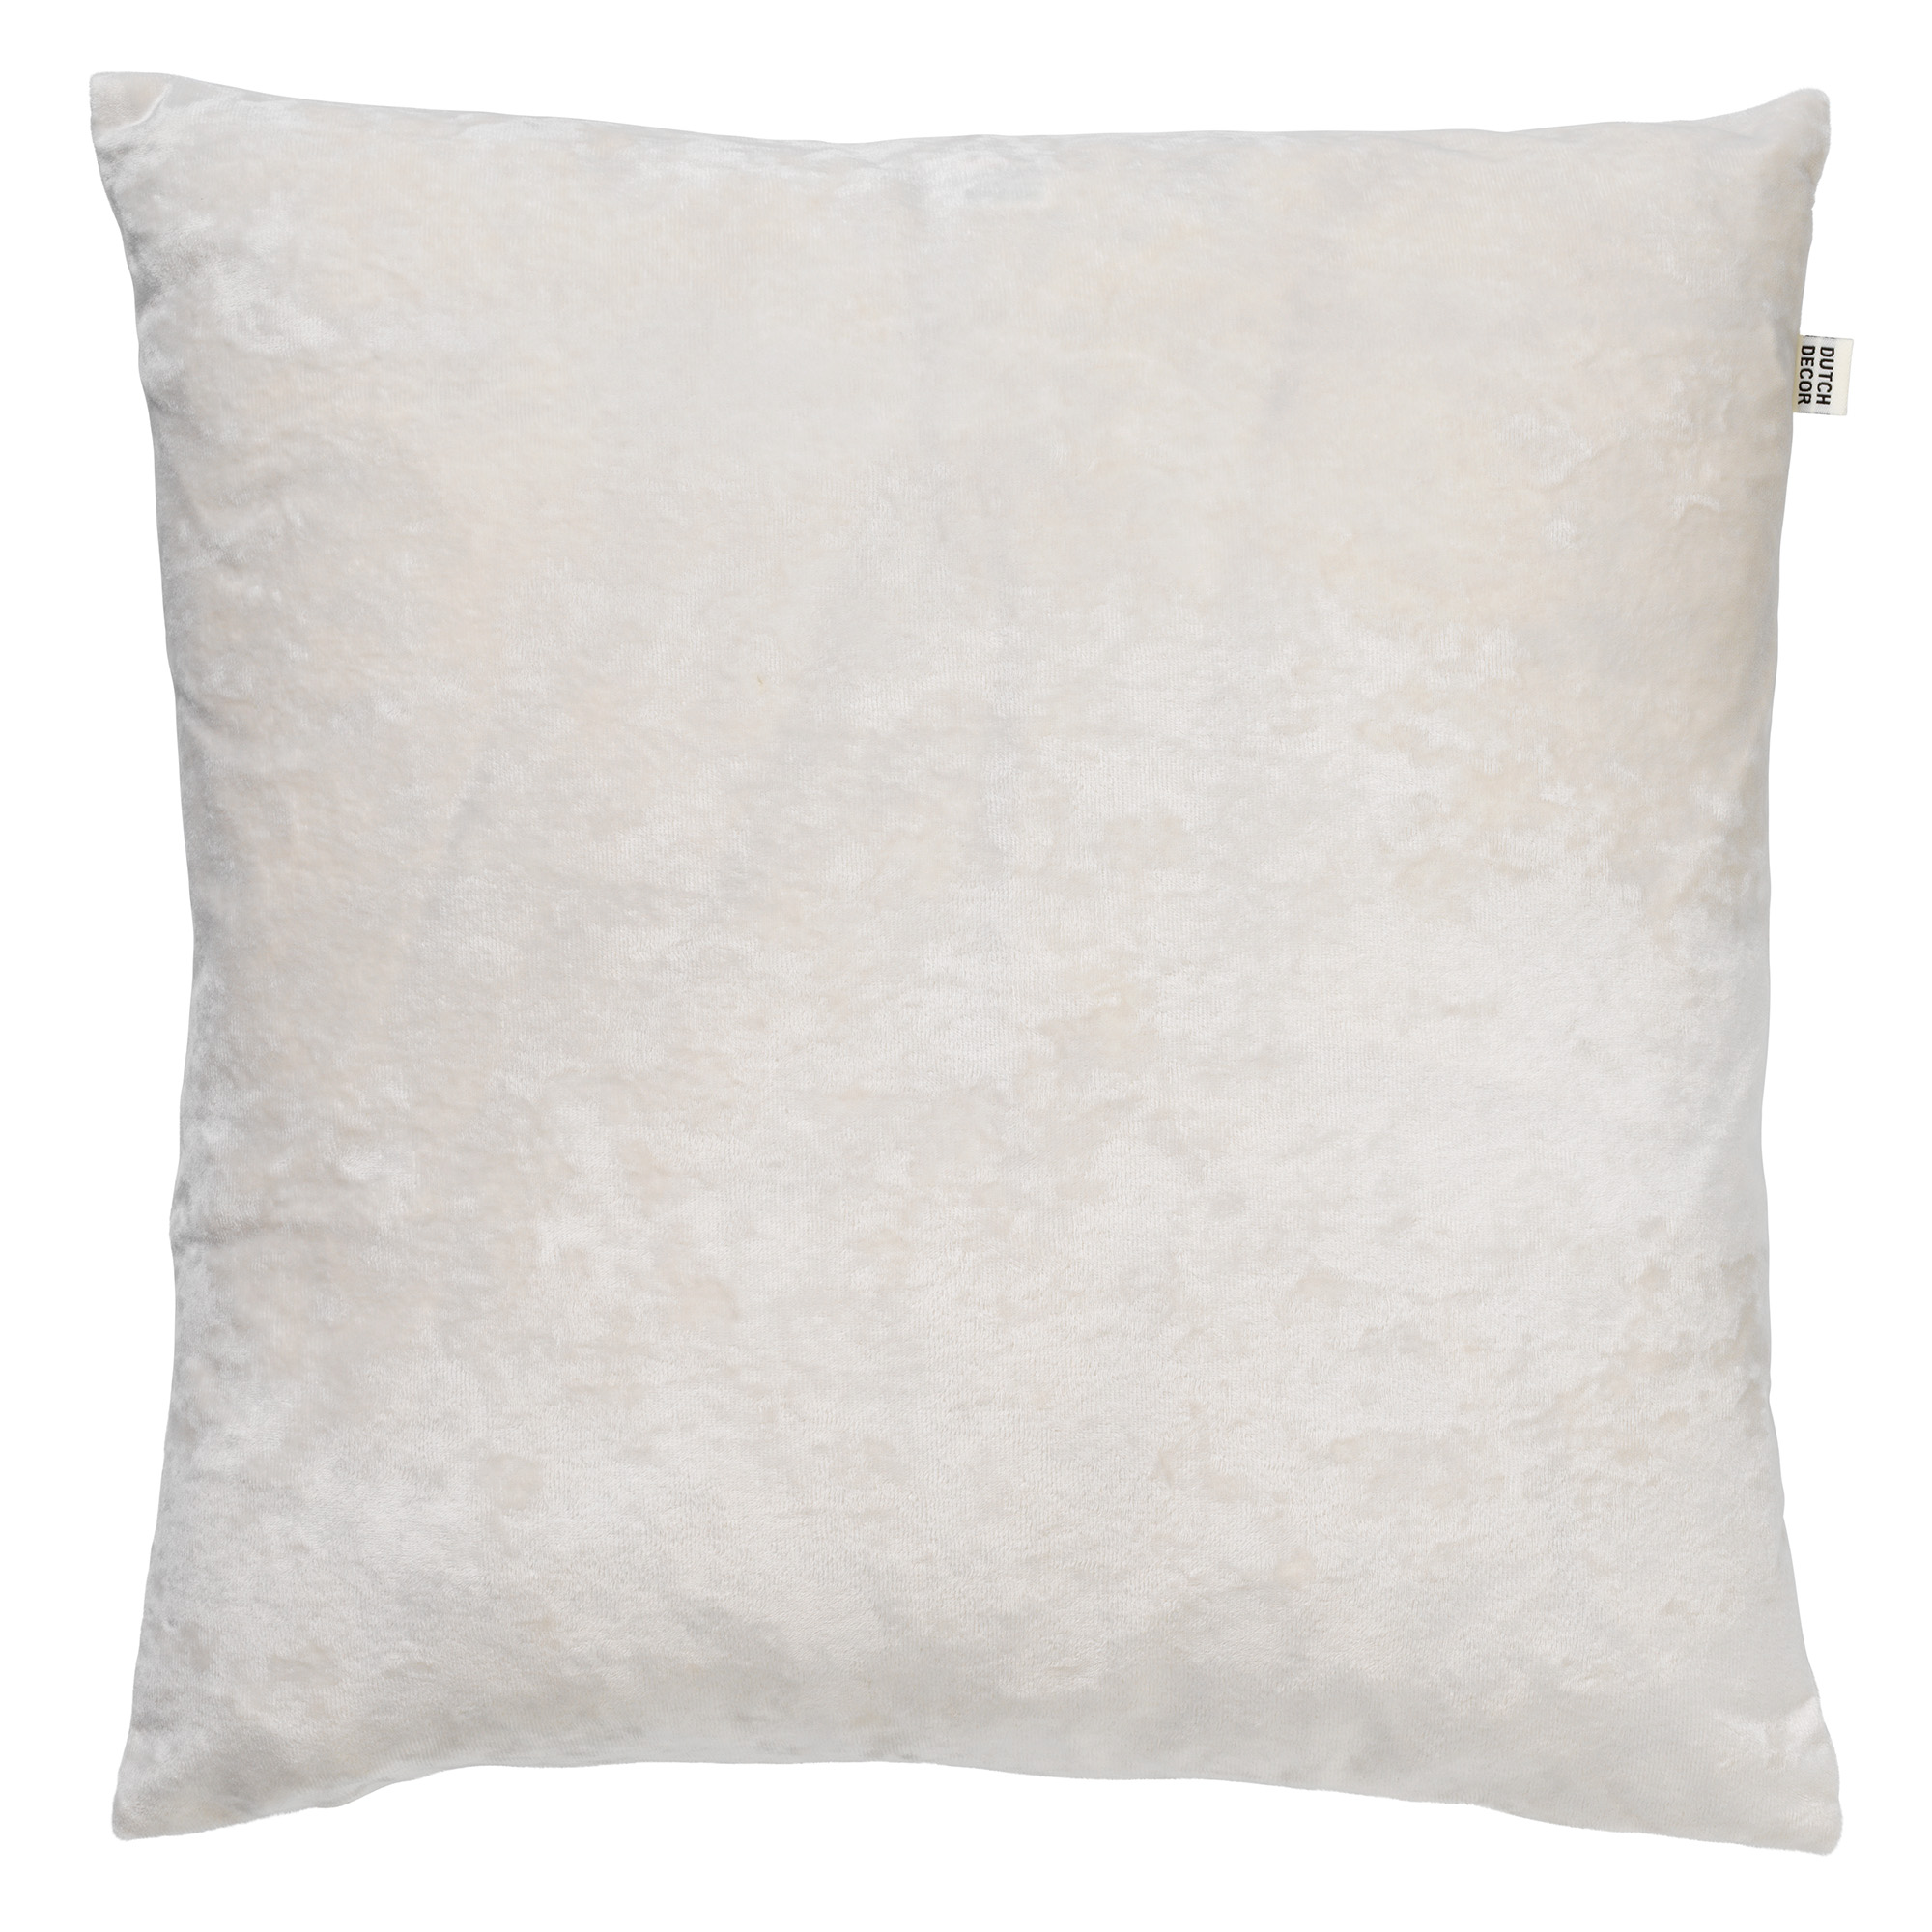 SKY - Cushion cover 45x45 cm Snow White - off-white